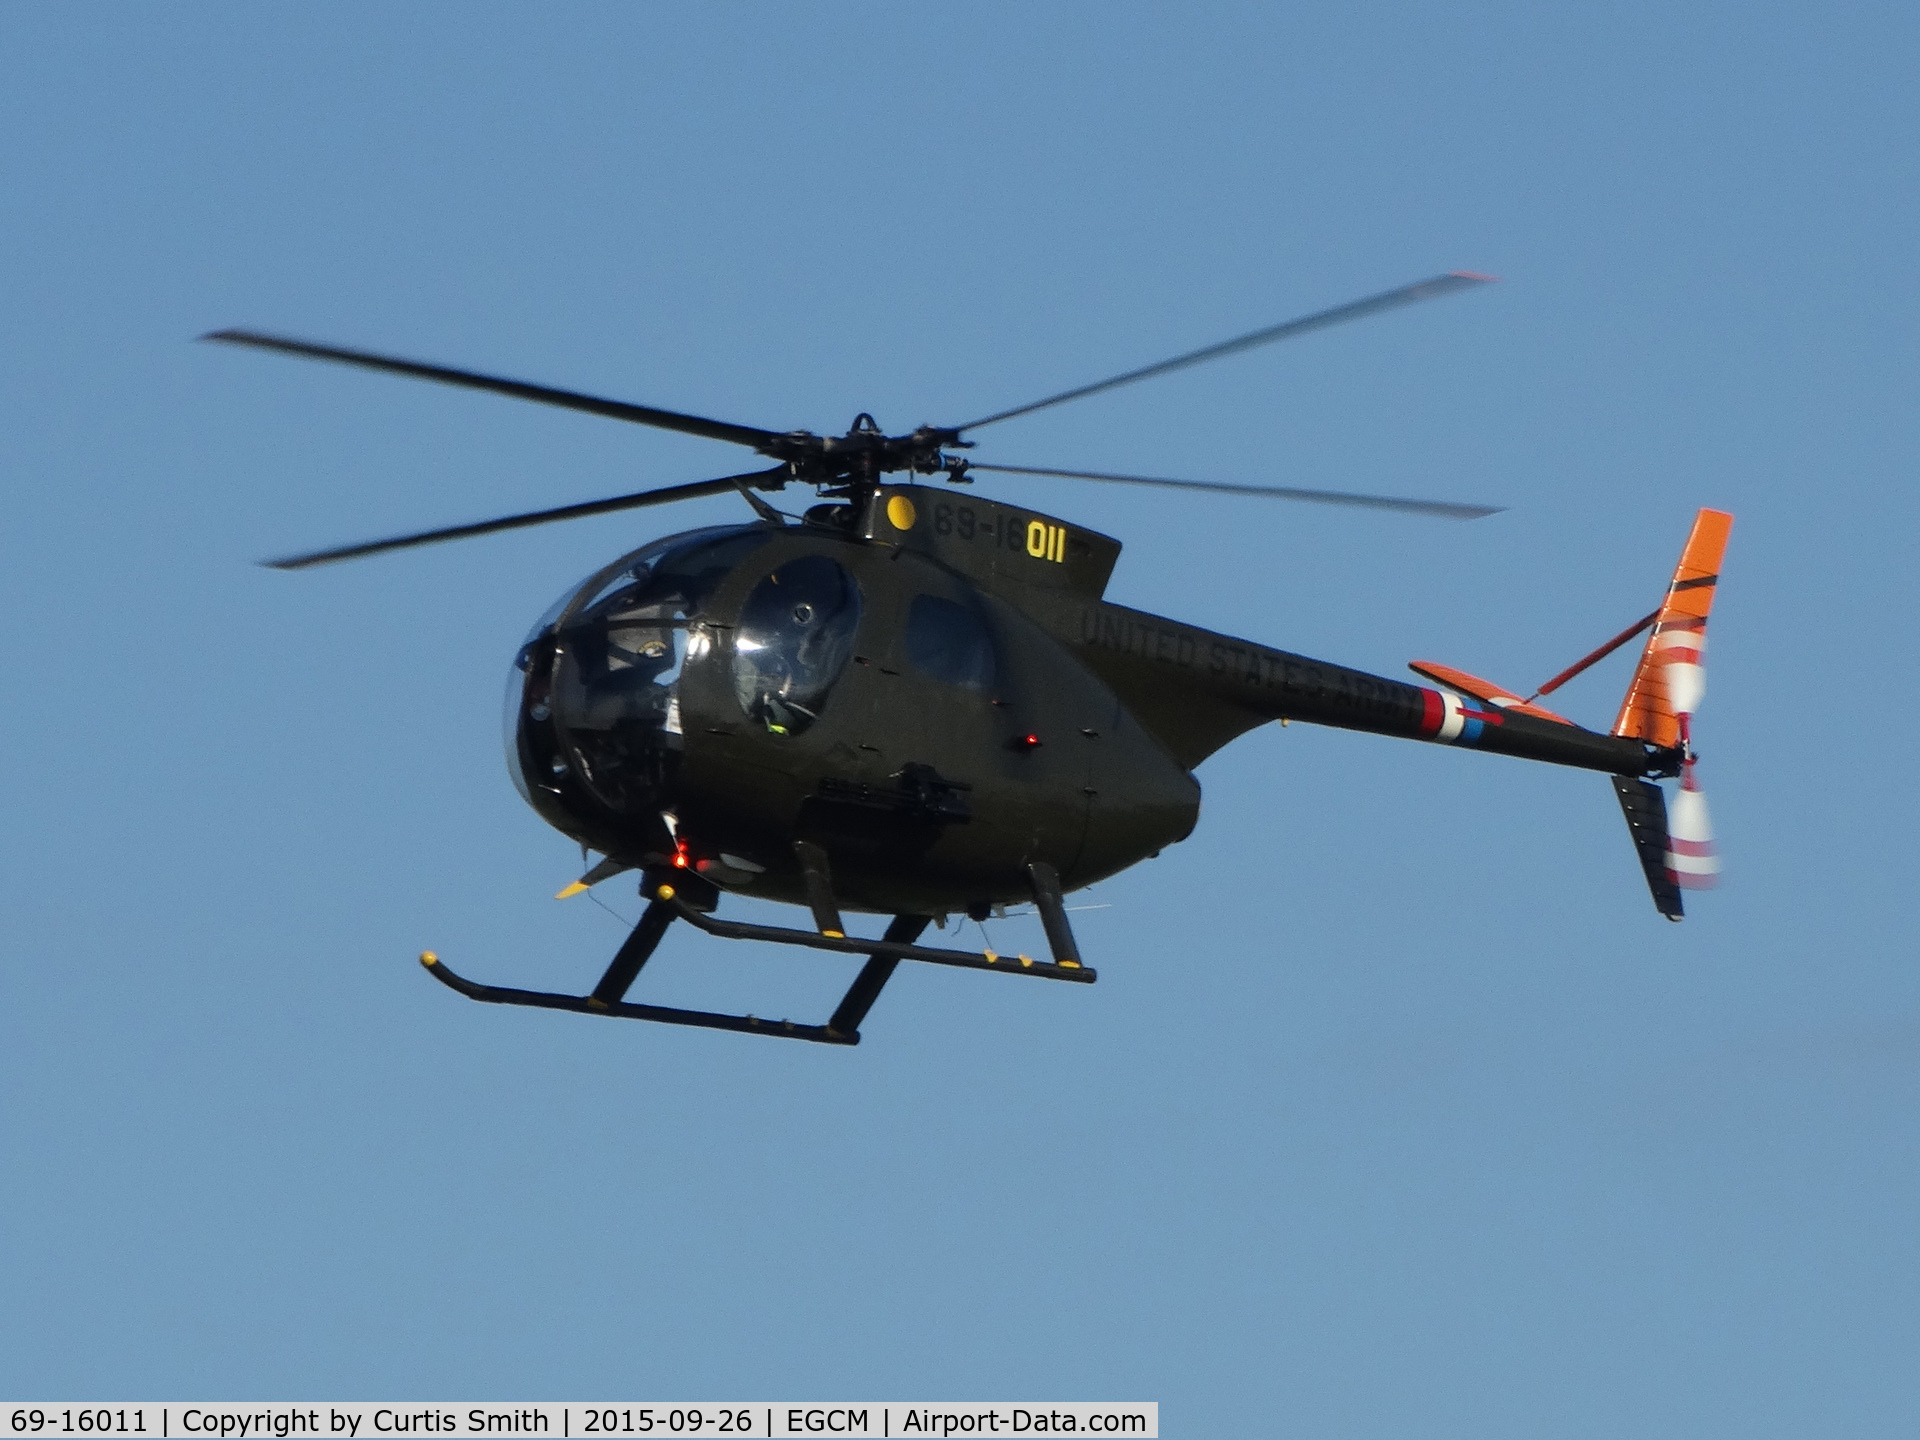 69-16011, 1969 Hughes OH-6A Cayuse C/N 1381, USAF Hughes OH-6A seen at RAF Church Fenton, Leeds.